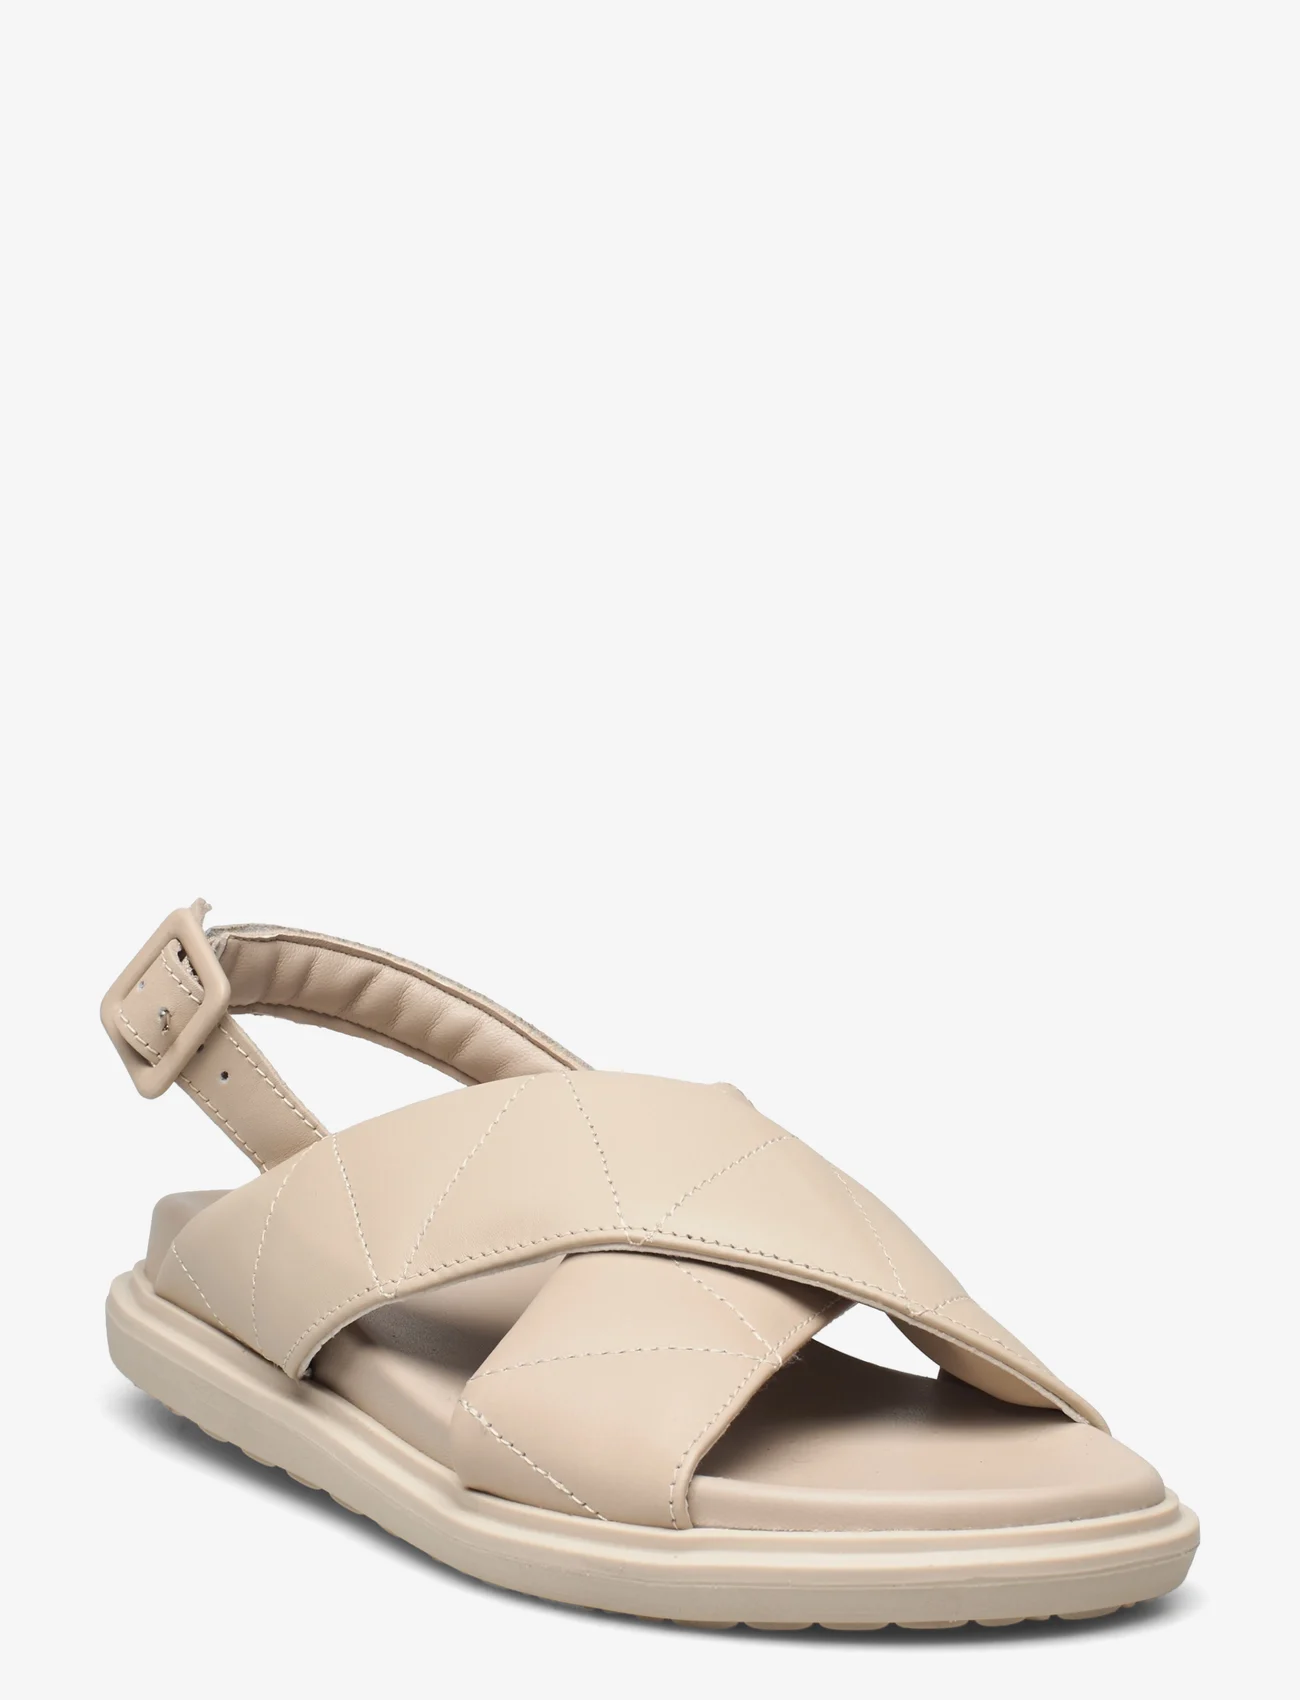 Bianco - BIAFRANCINE Quilt Sandal - platta sandaler - natural - 0